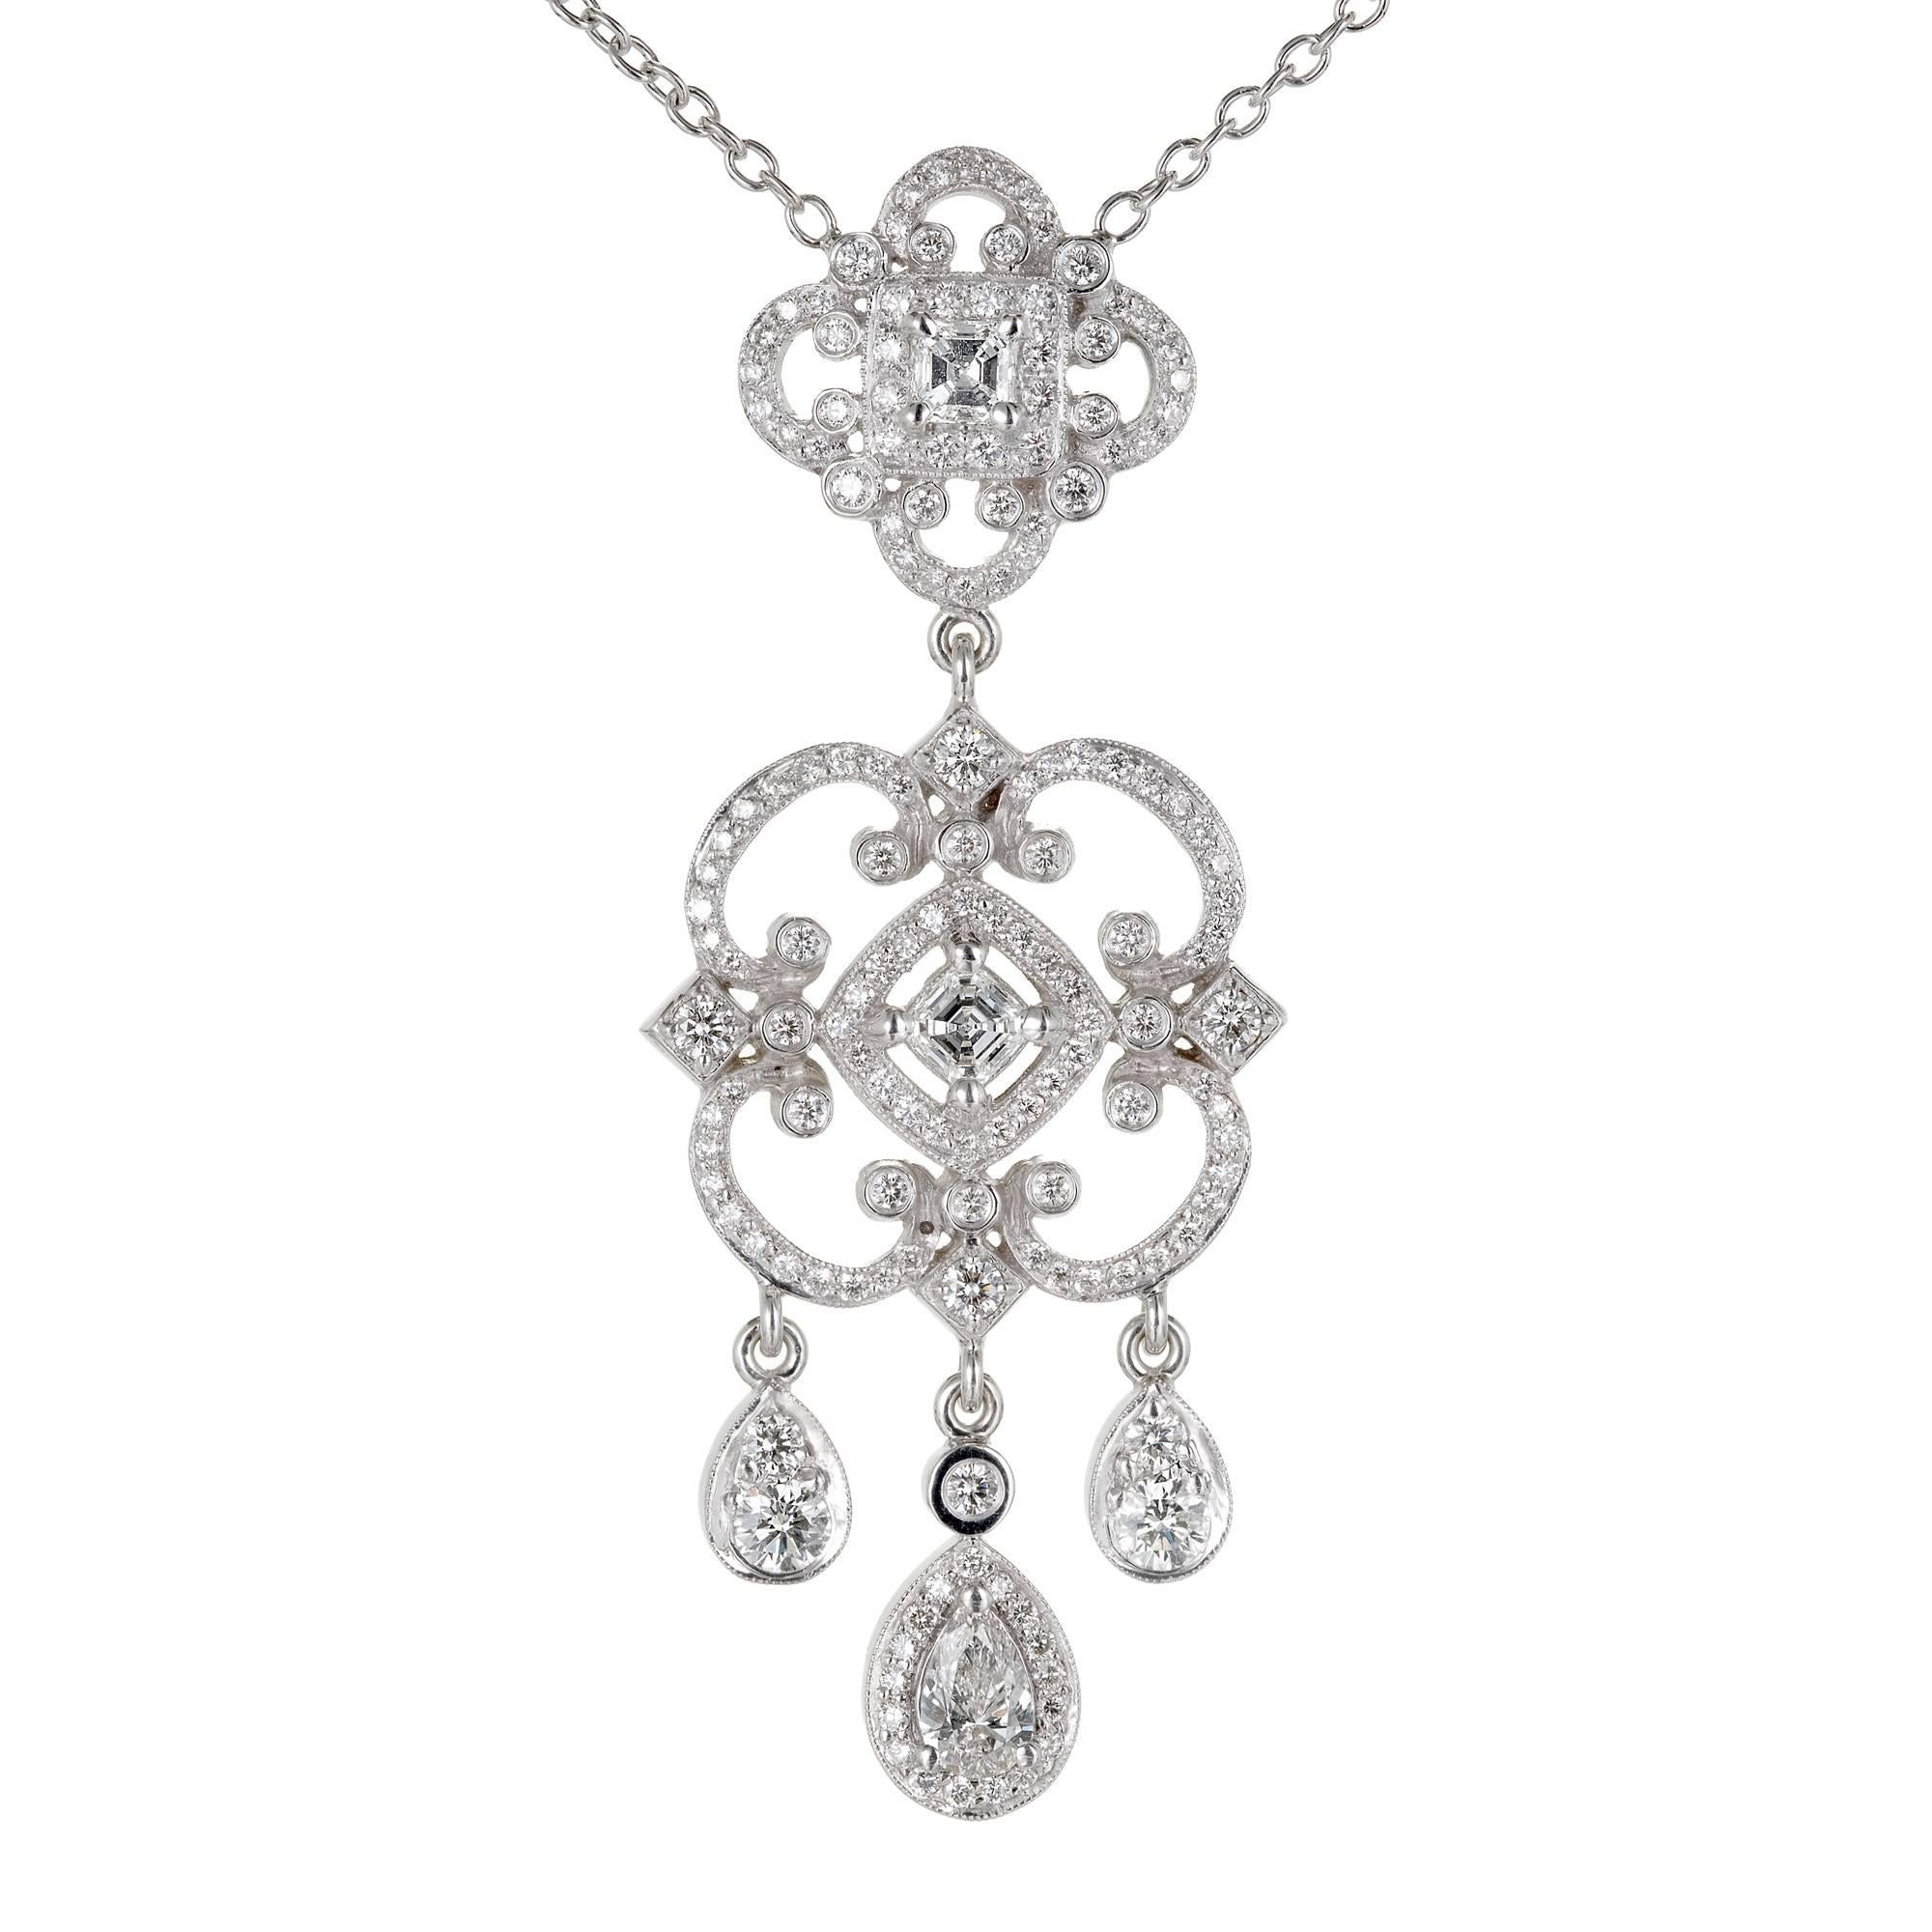 Penny Preville 1.59 Carat Diamond Gold Chandelier Style Pendant Necklace